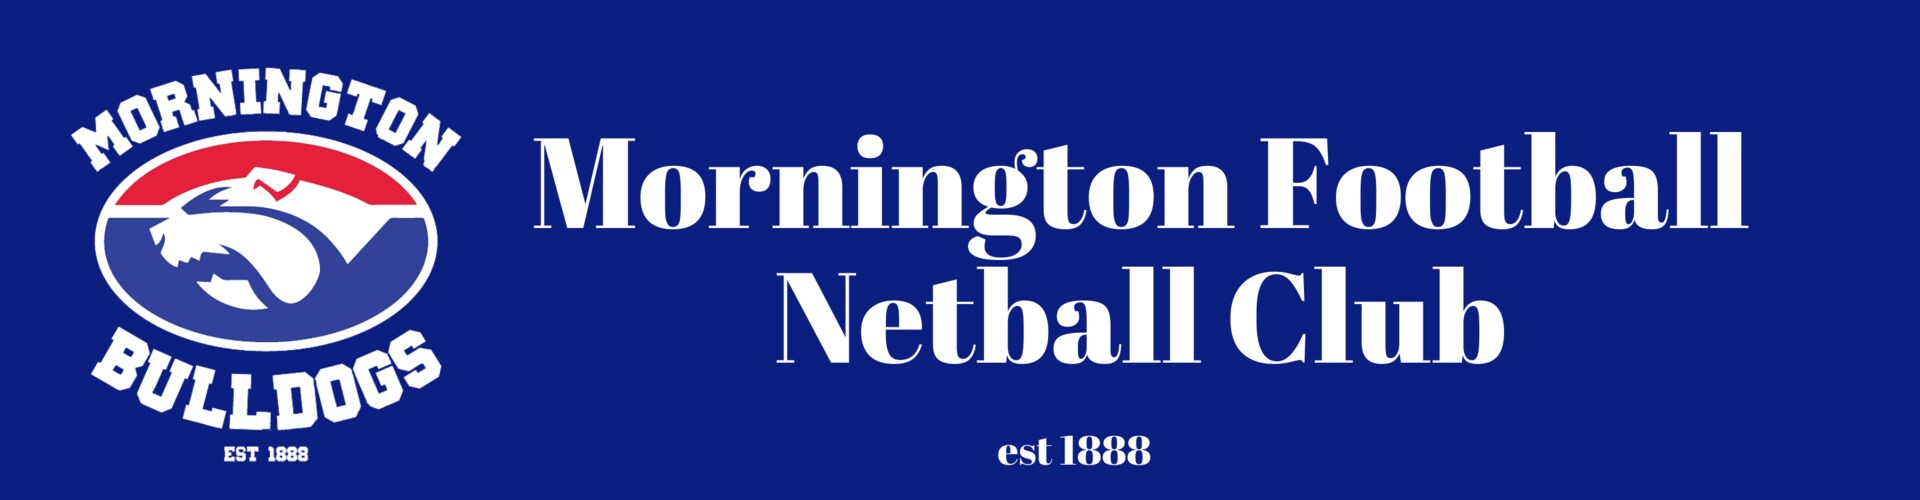 Mornington Football Netball Club logo